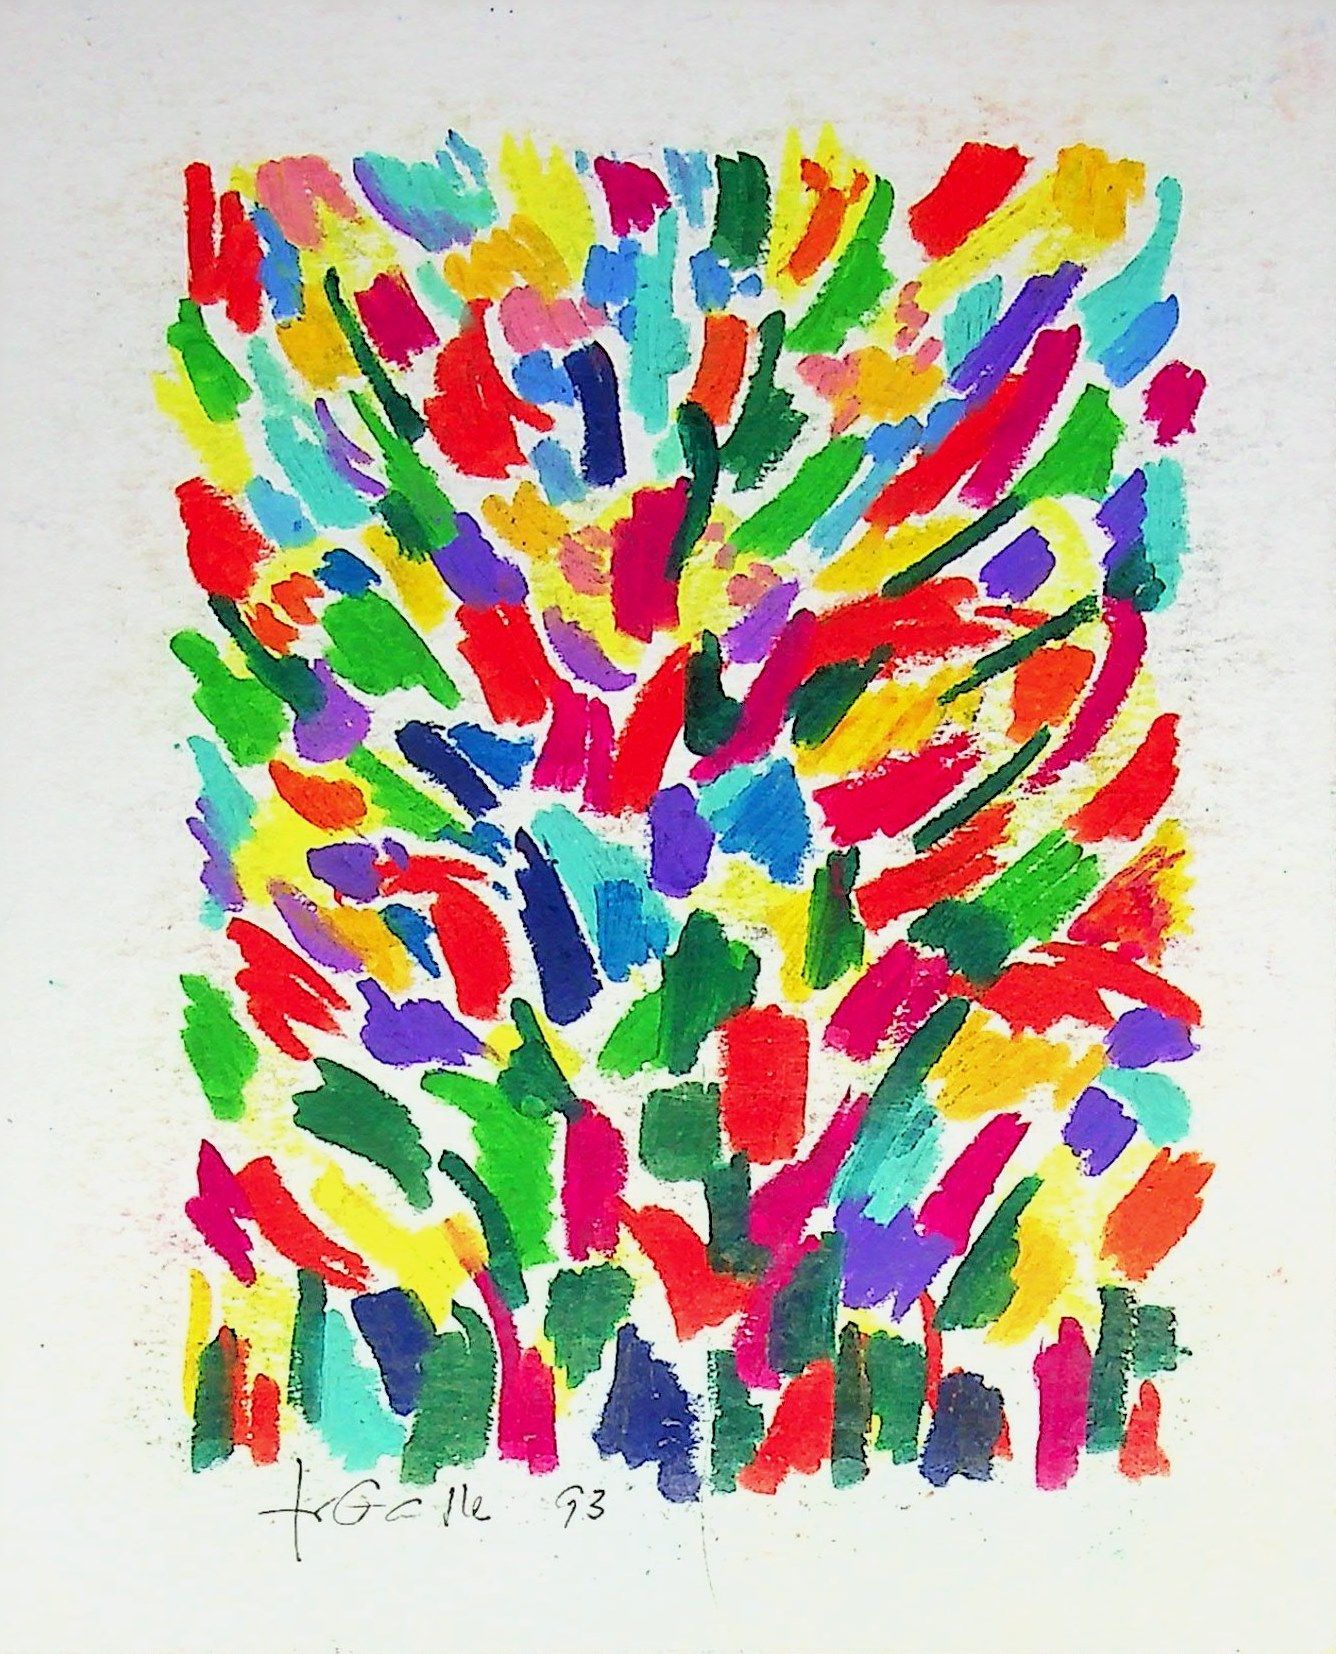 Françoise Galle 弗朗索瓦丝-加勒 (1940)

抽象树, 1993

油性粉笔画

底部有艺术家的签名和日期

牛皮纸上 16.5 x 13.&hellip;